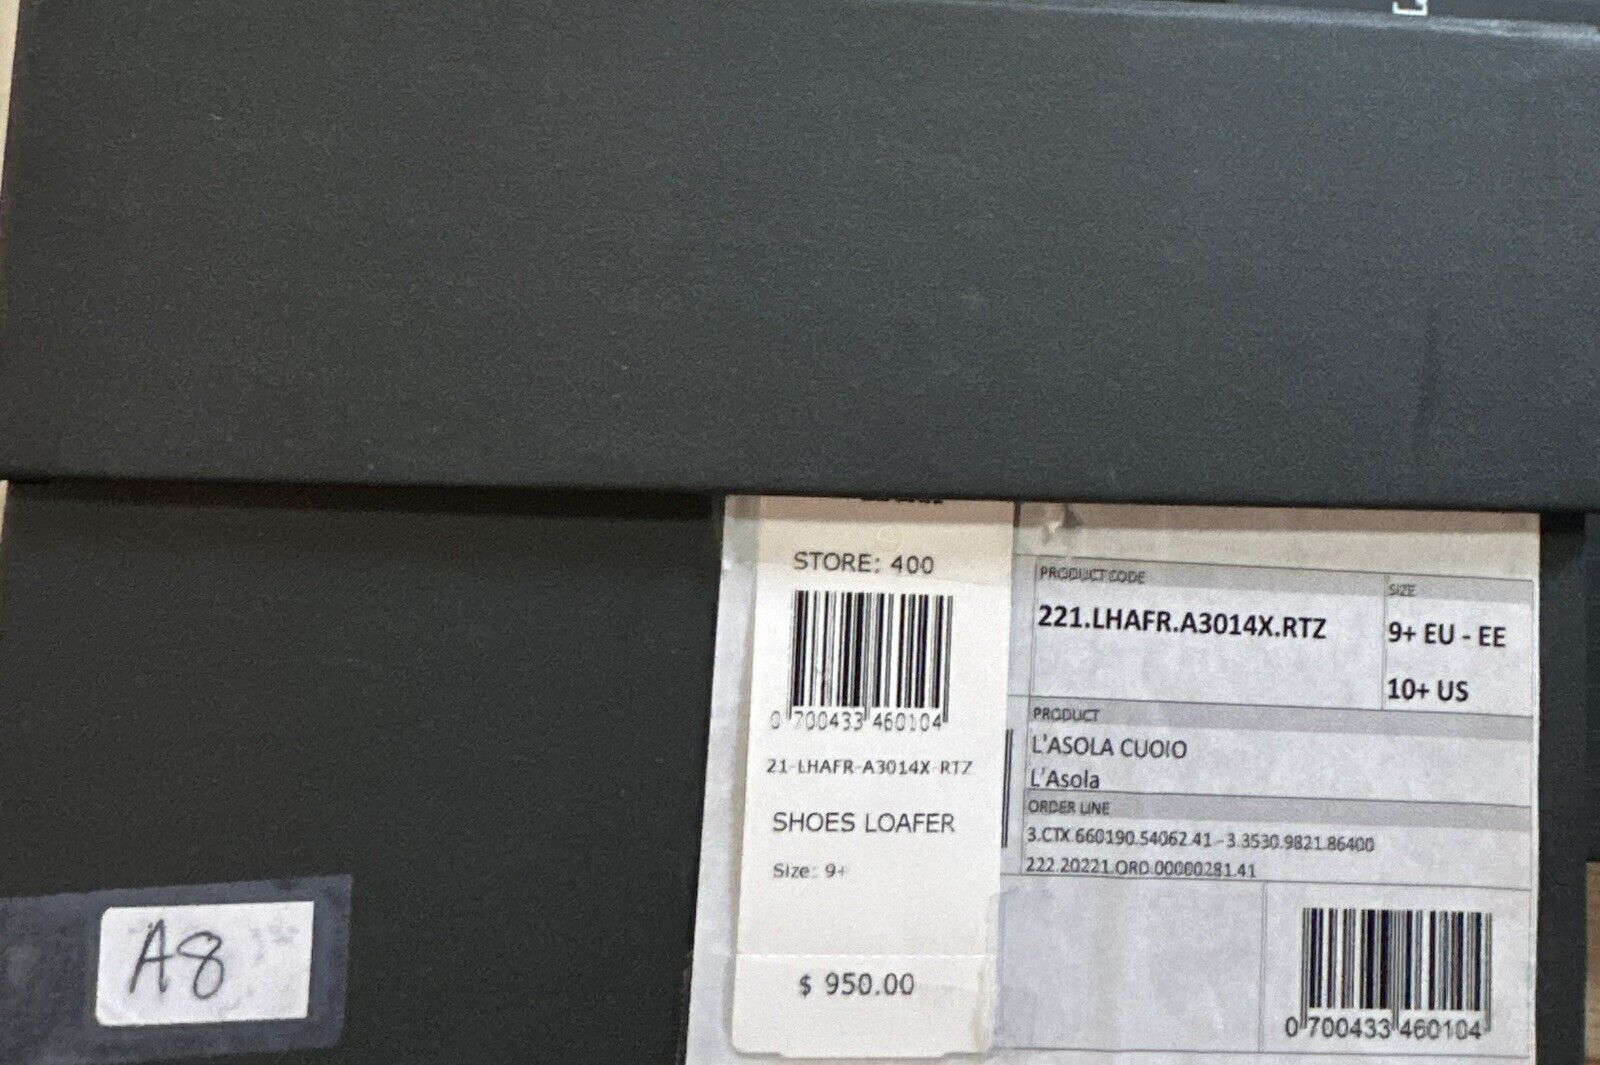 Ermenegildo Zegna Leather Reverse Construction Loafers DK Blue 10.5 US New $950